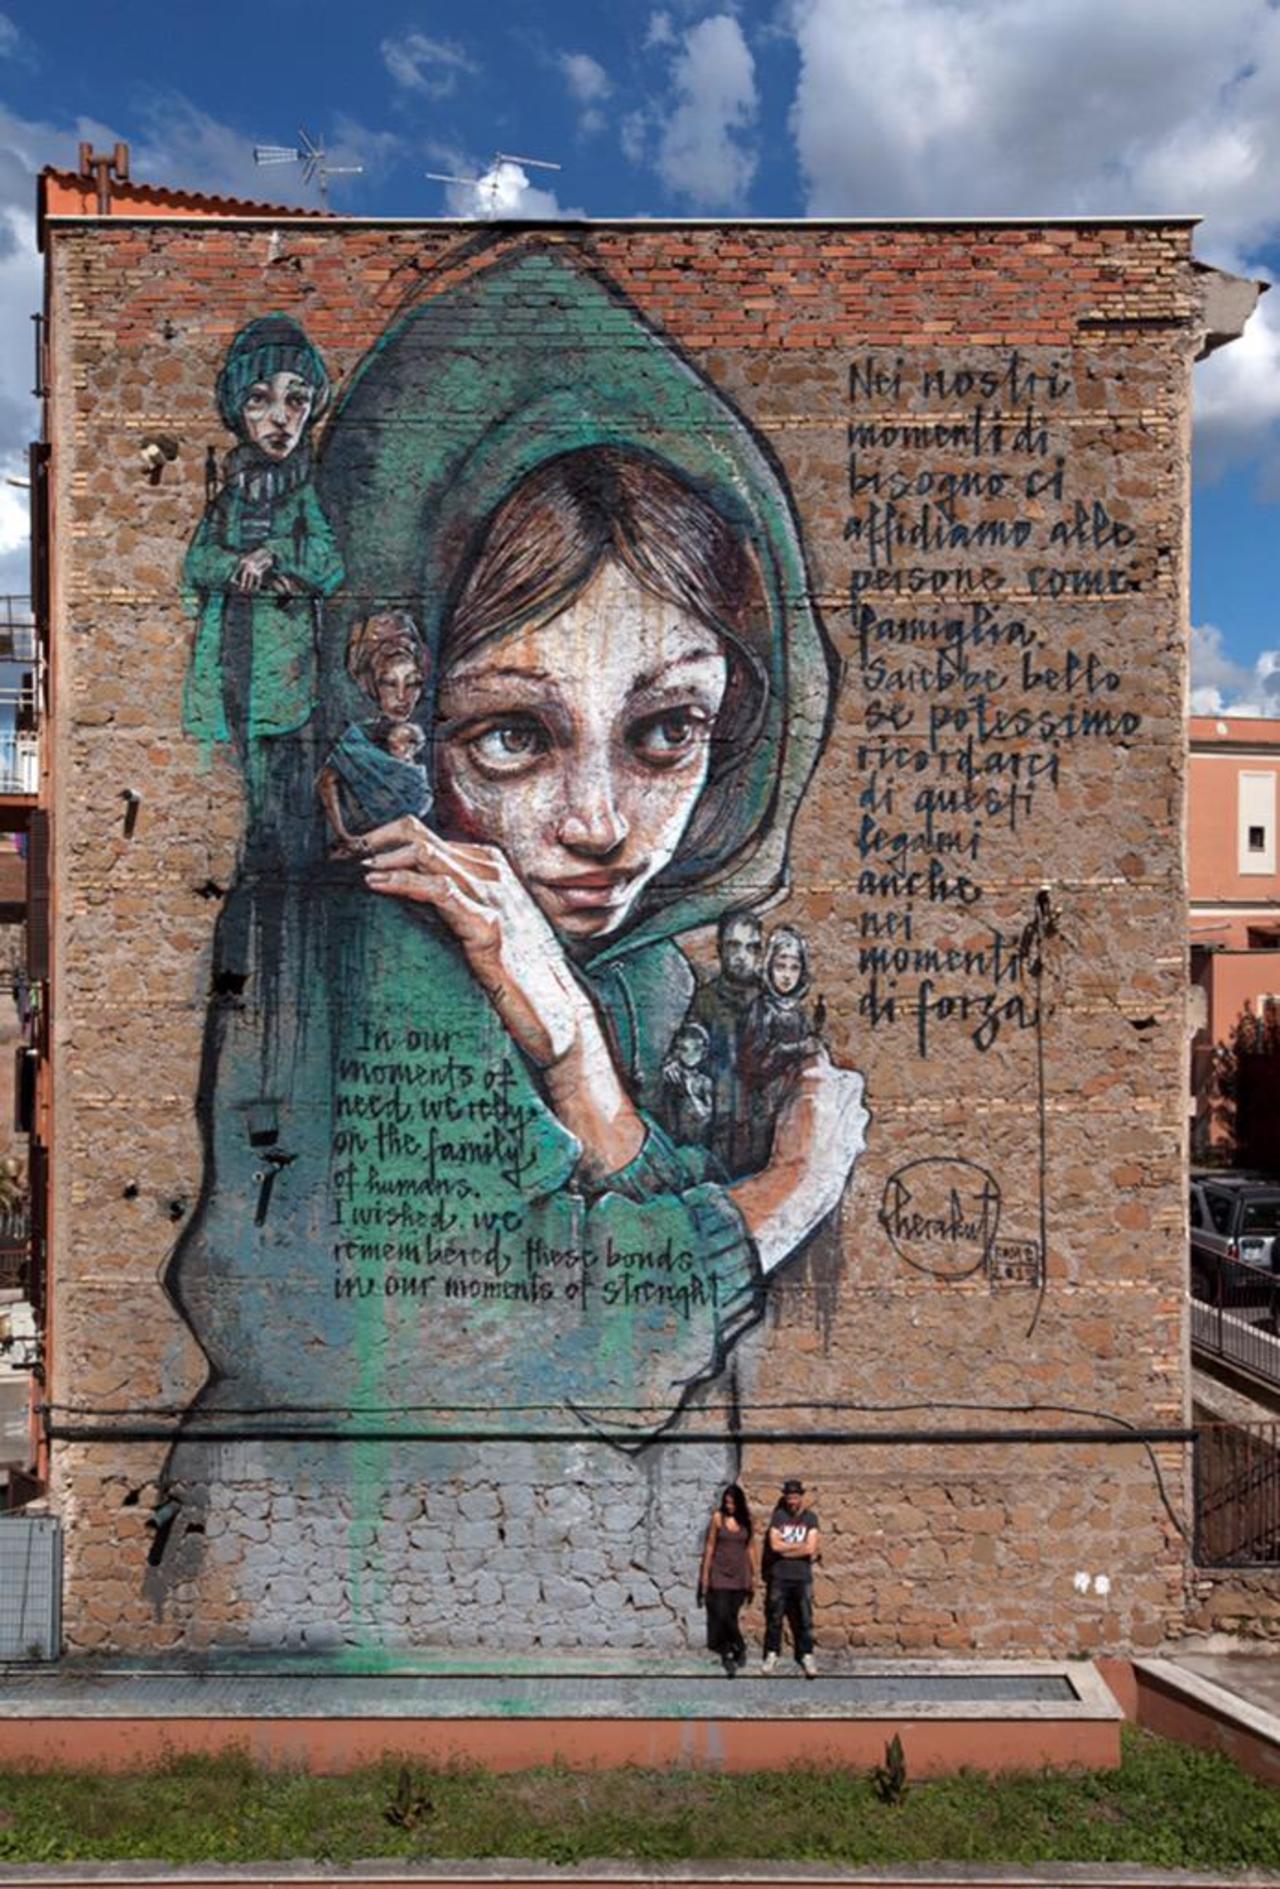 RelaxInRome: DBXIII: RT AuKeats: #Herakut creates a new #mural in #Rome #Italy #switch #streetart #graffiti #bedif… http://t.co/CkgXx6pajW